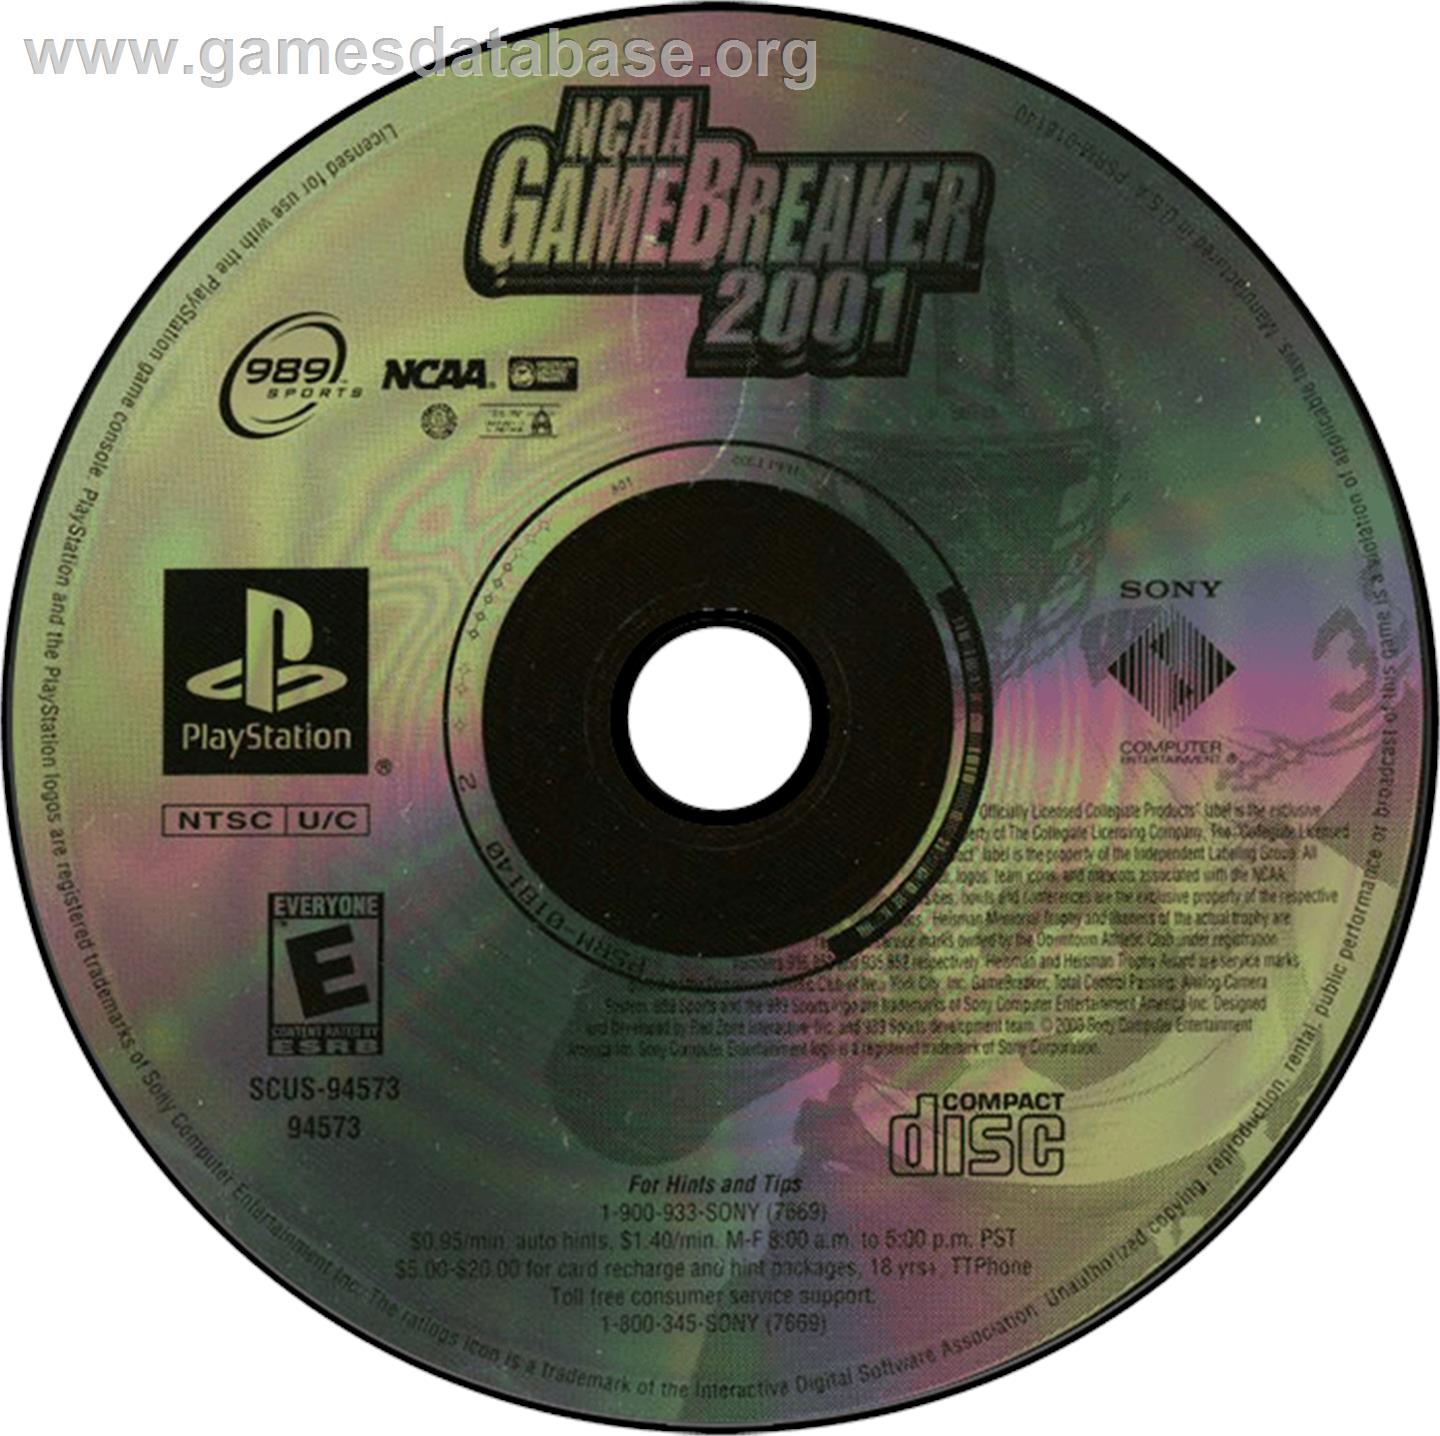 NCAA GameBreaker 2001 - Sony Playstation - Artwork - Disc